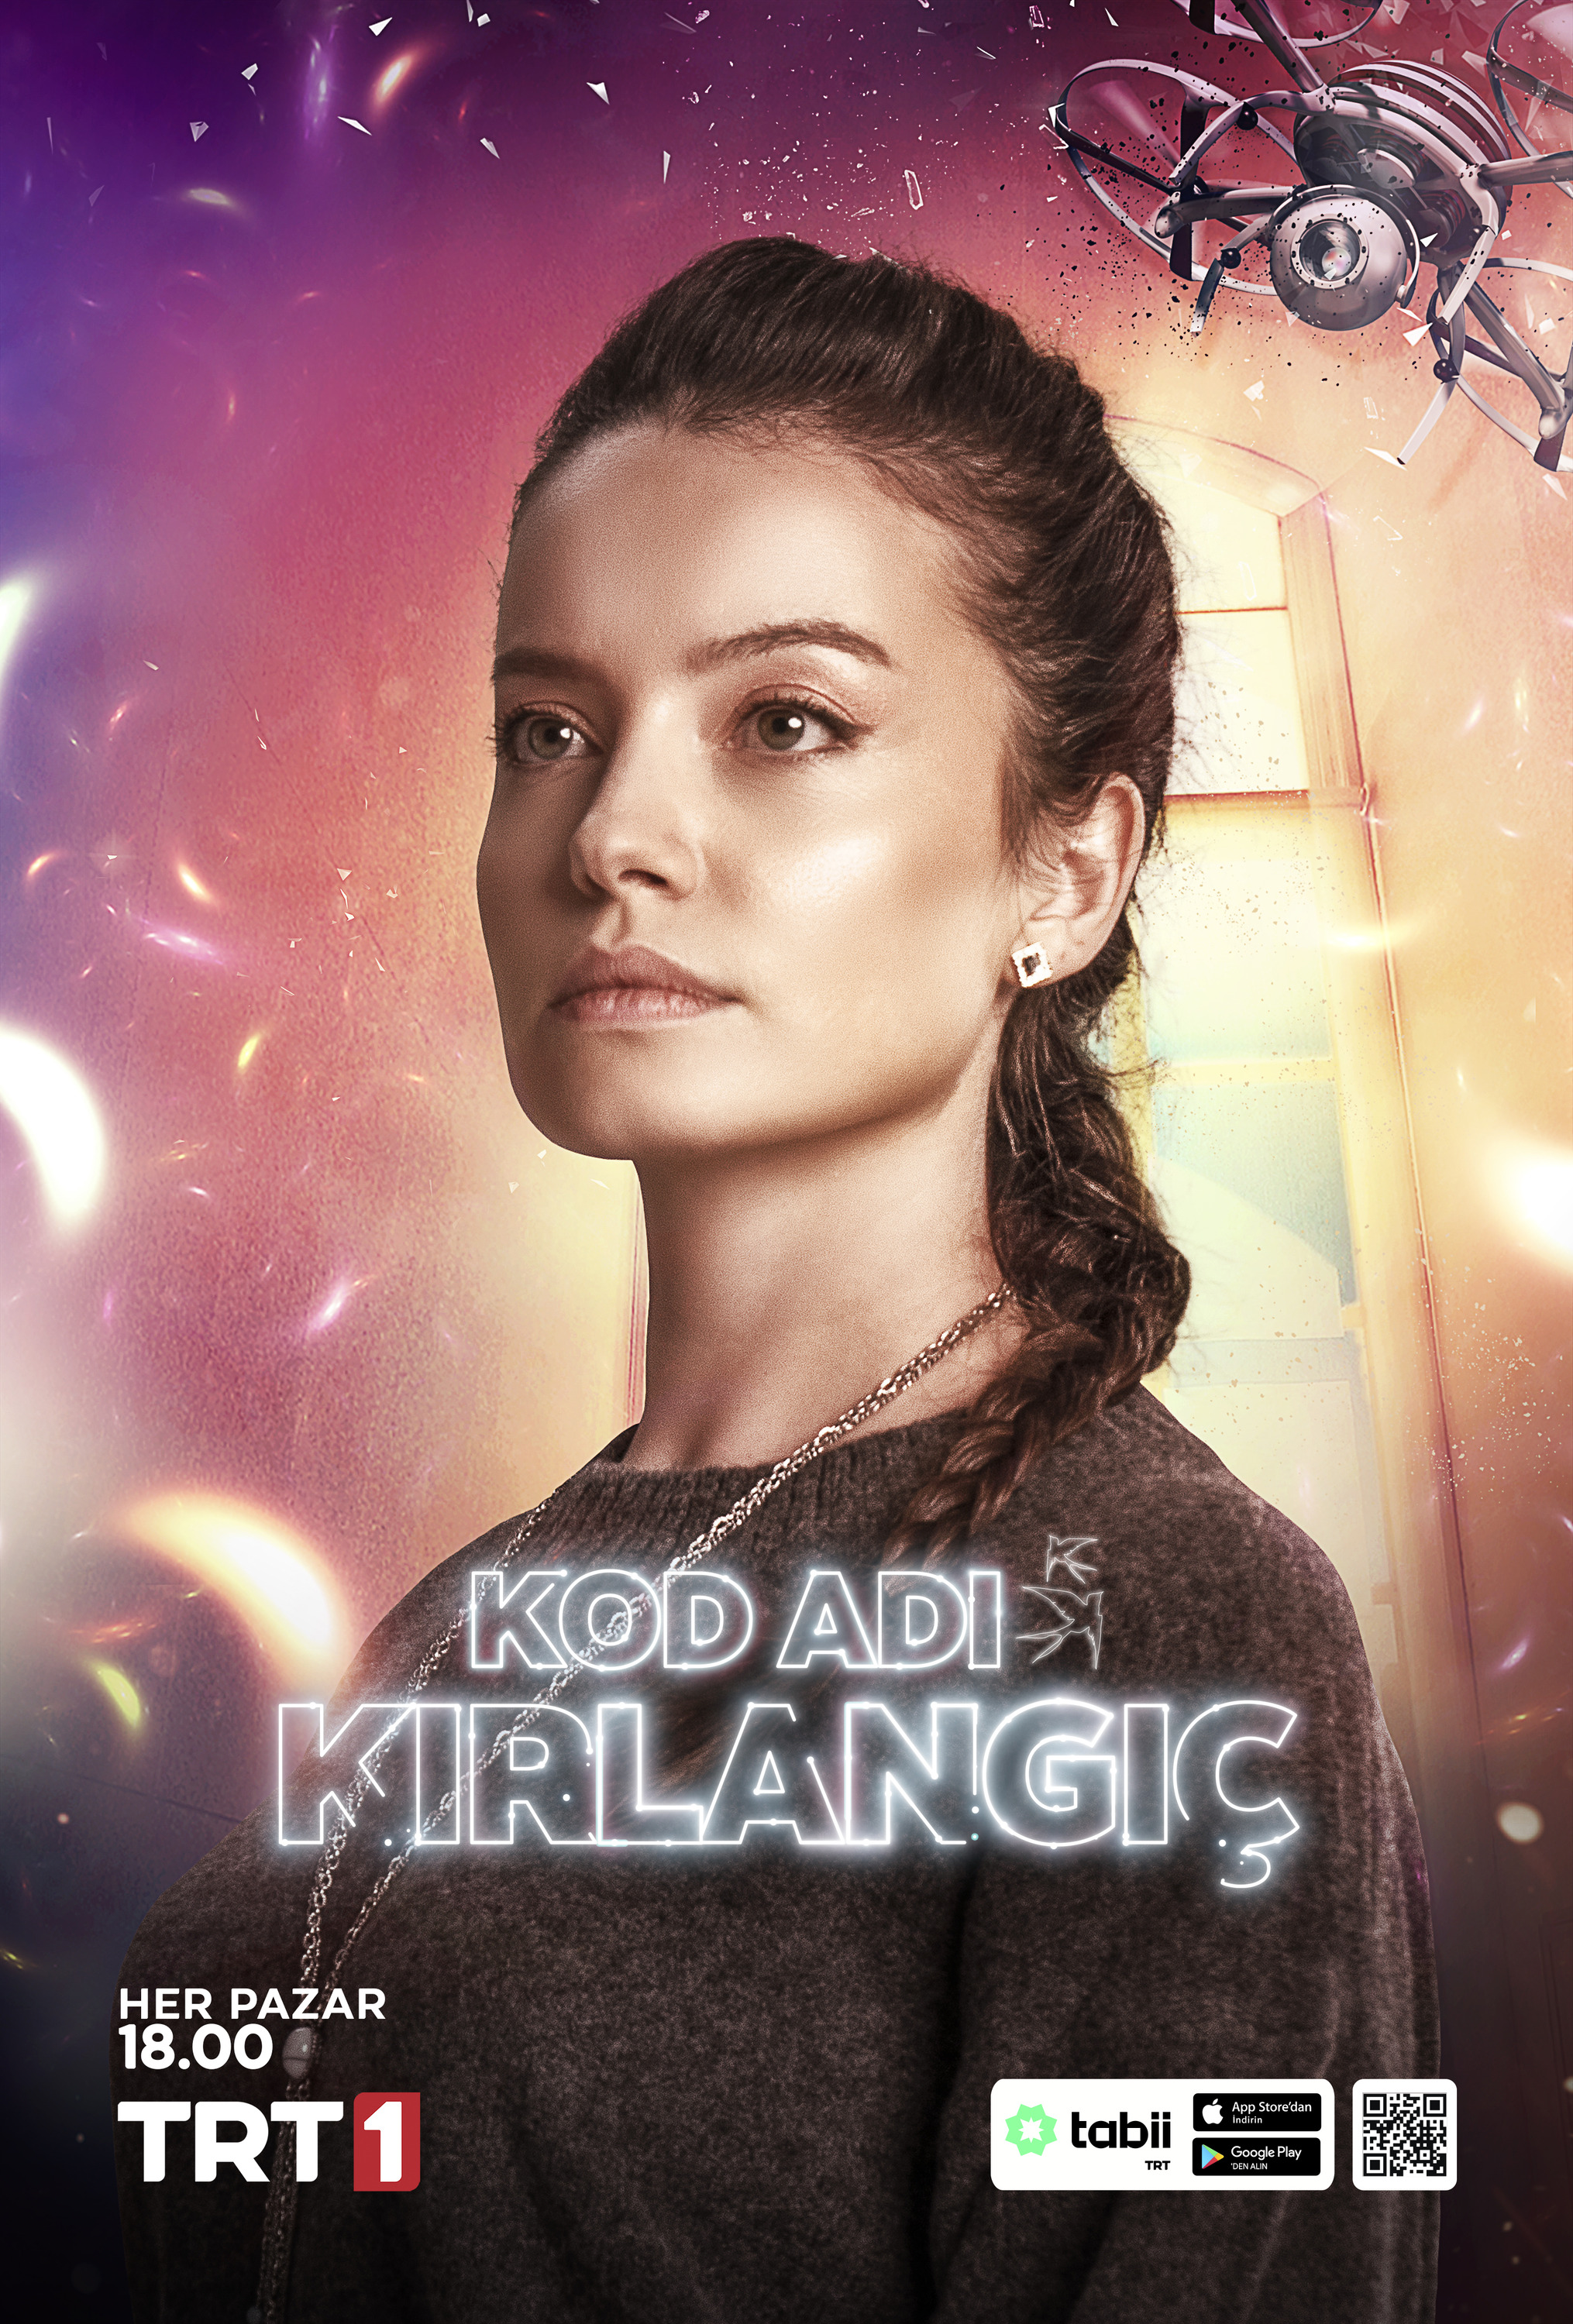 Mega Sized TV Poster Image for Kod Adı Kırlangıç (#11 of 12)